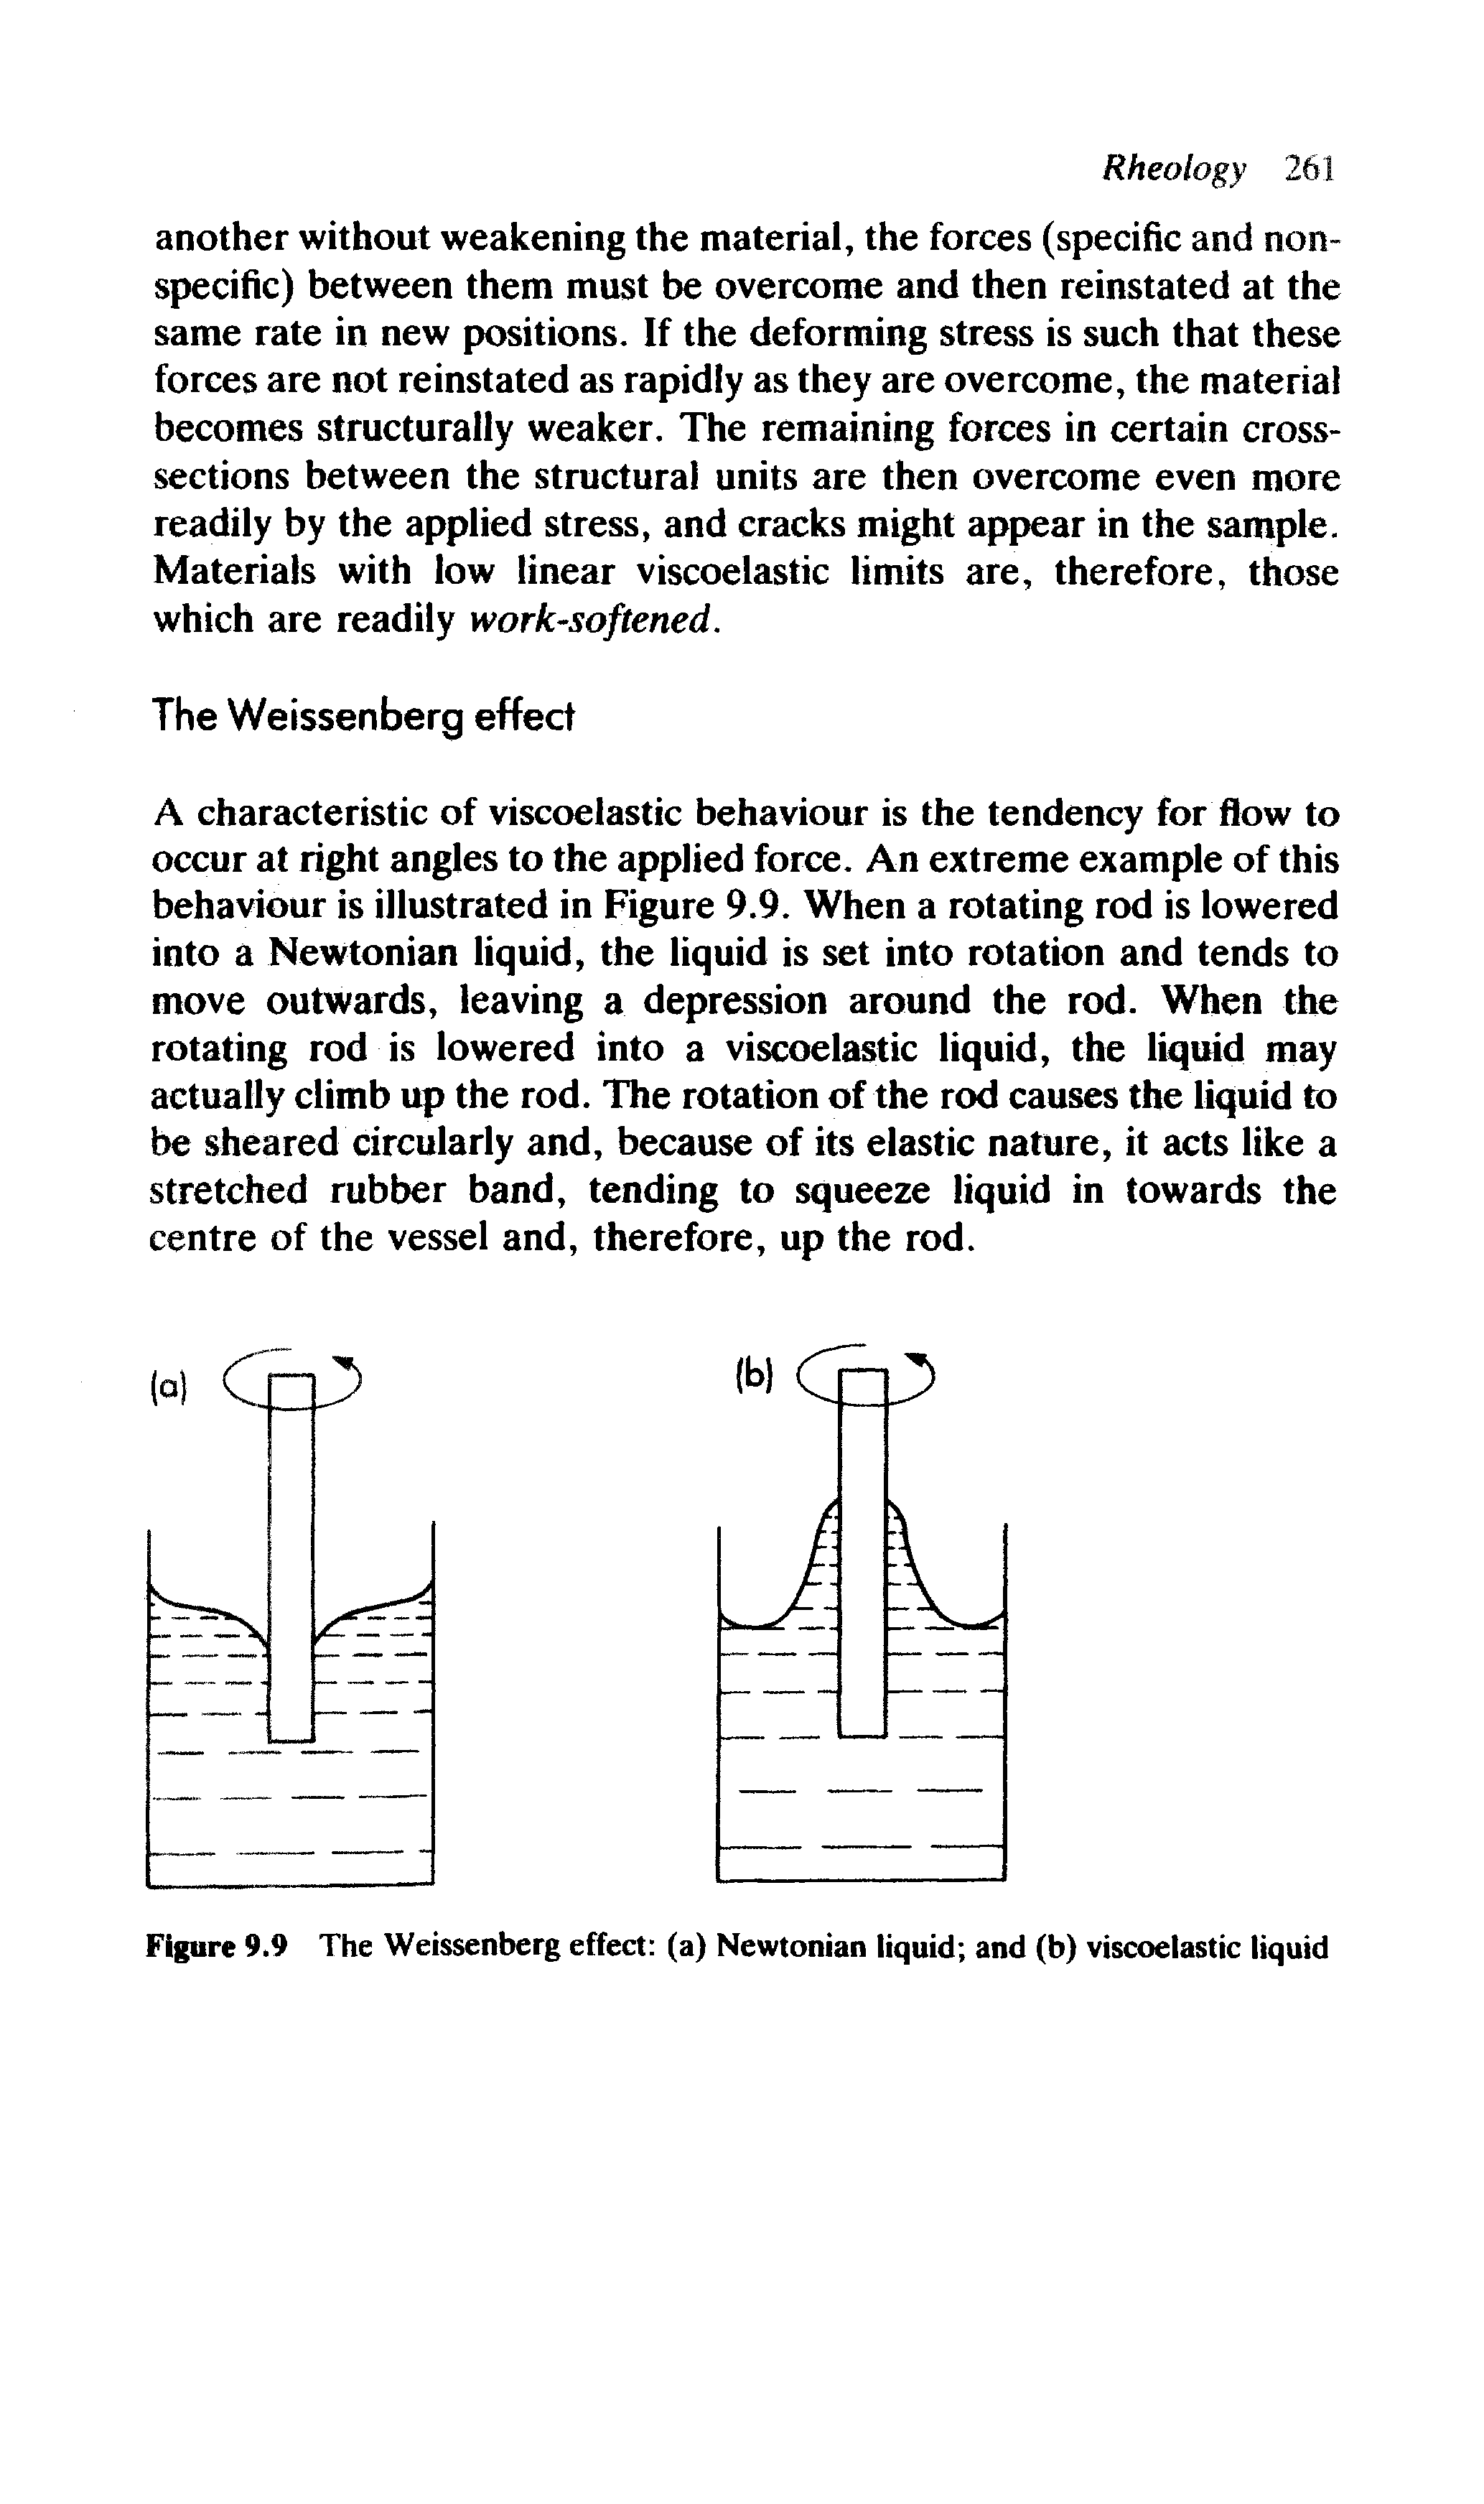 Figure 9.9 The Weissenberg effect (a) Newtonian liquid and (b) viscoelastic liquid...